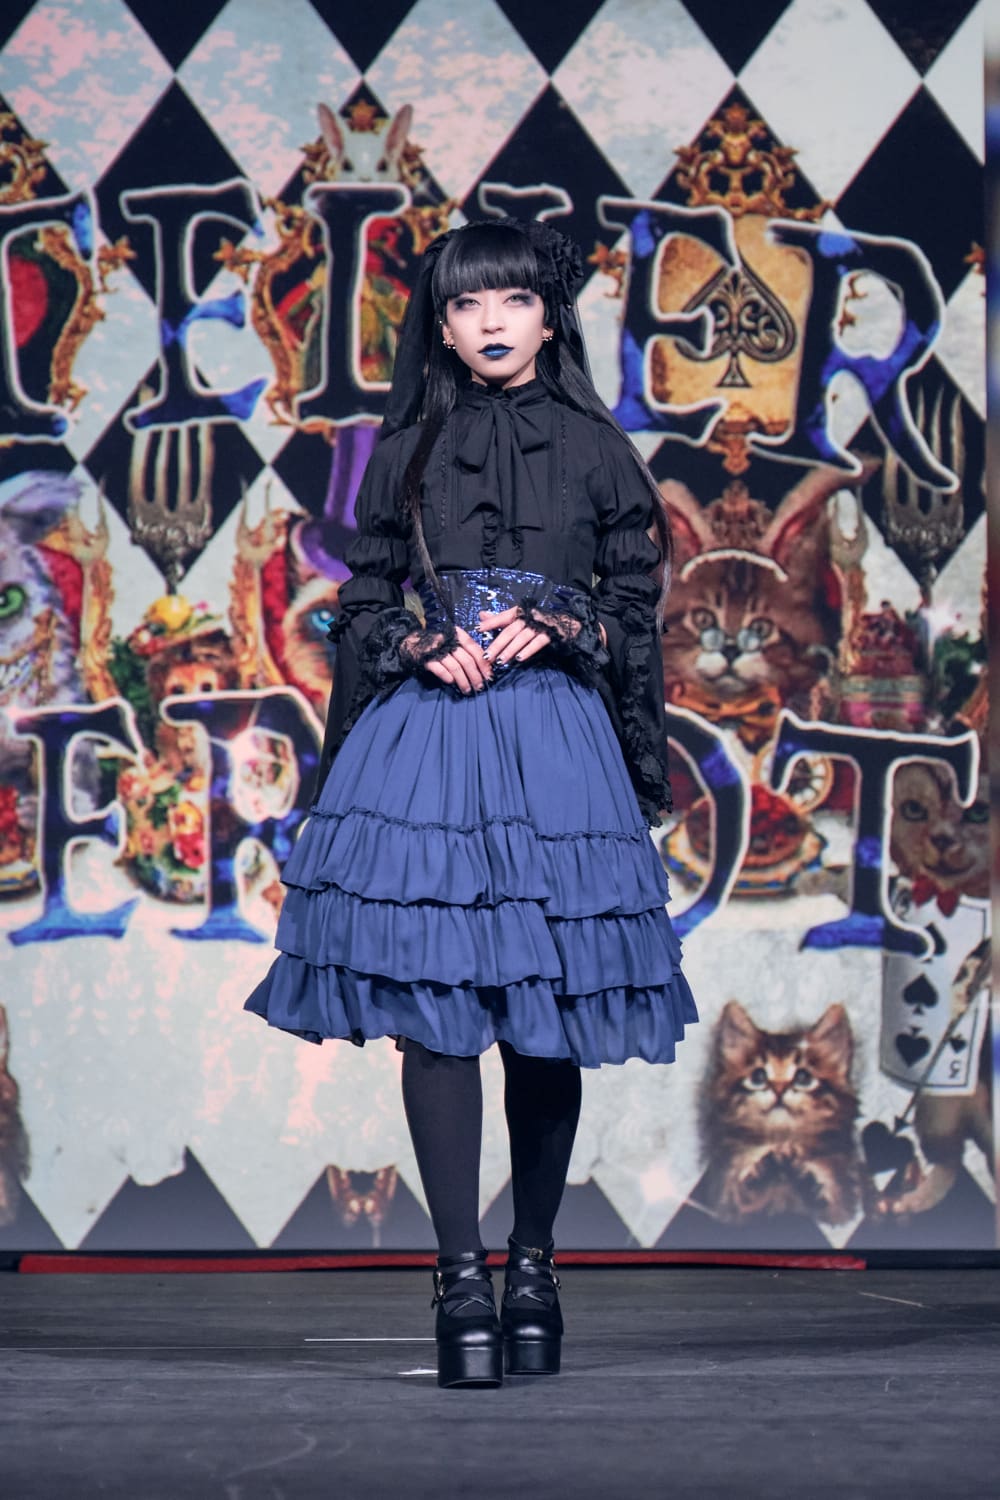 Atelier Pierrot gothic lolita model wearing black blouse, blue corset and skirt - full body walking pose 1.